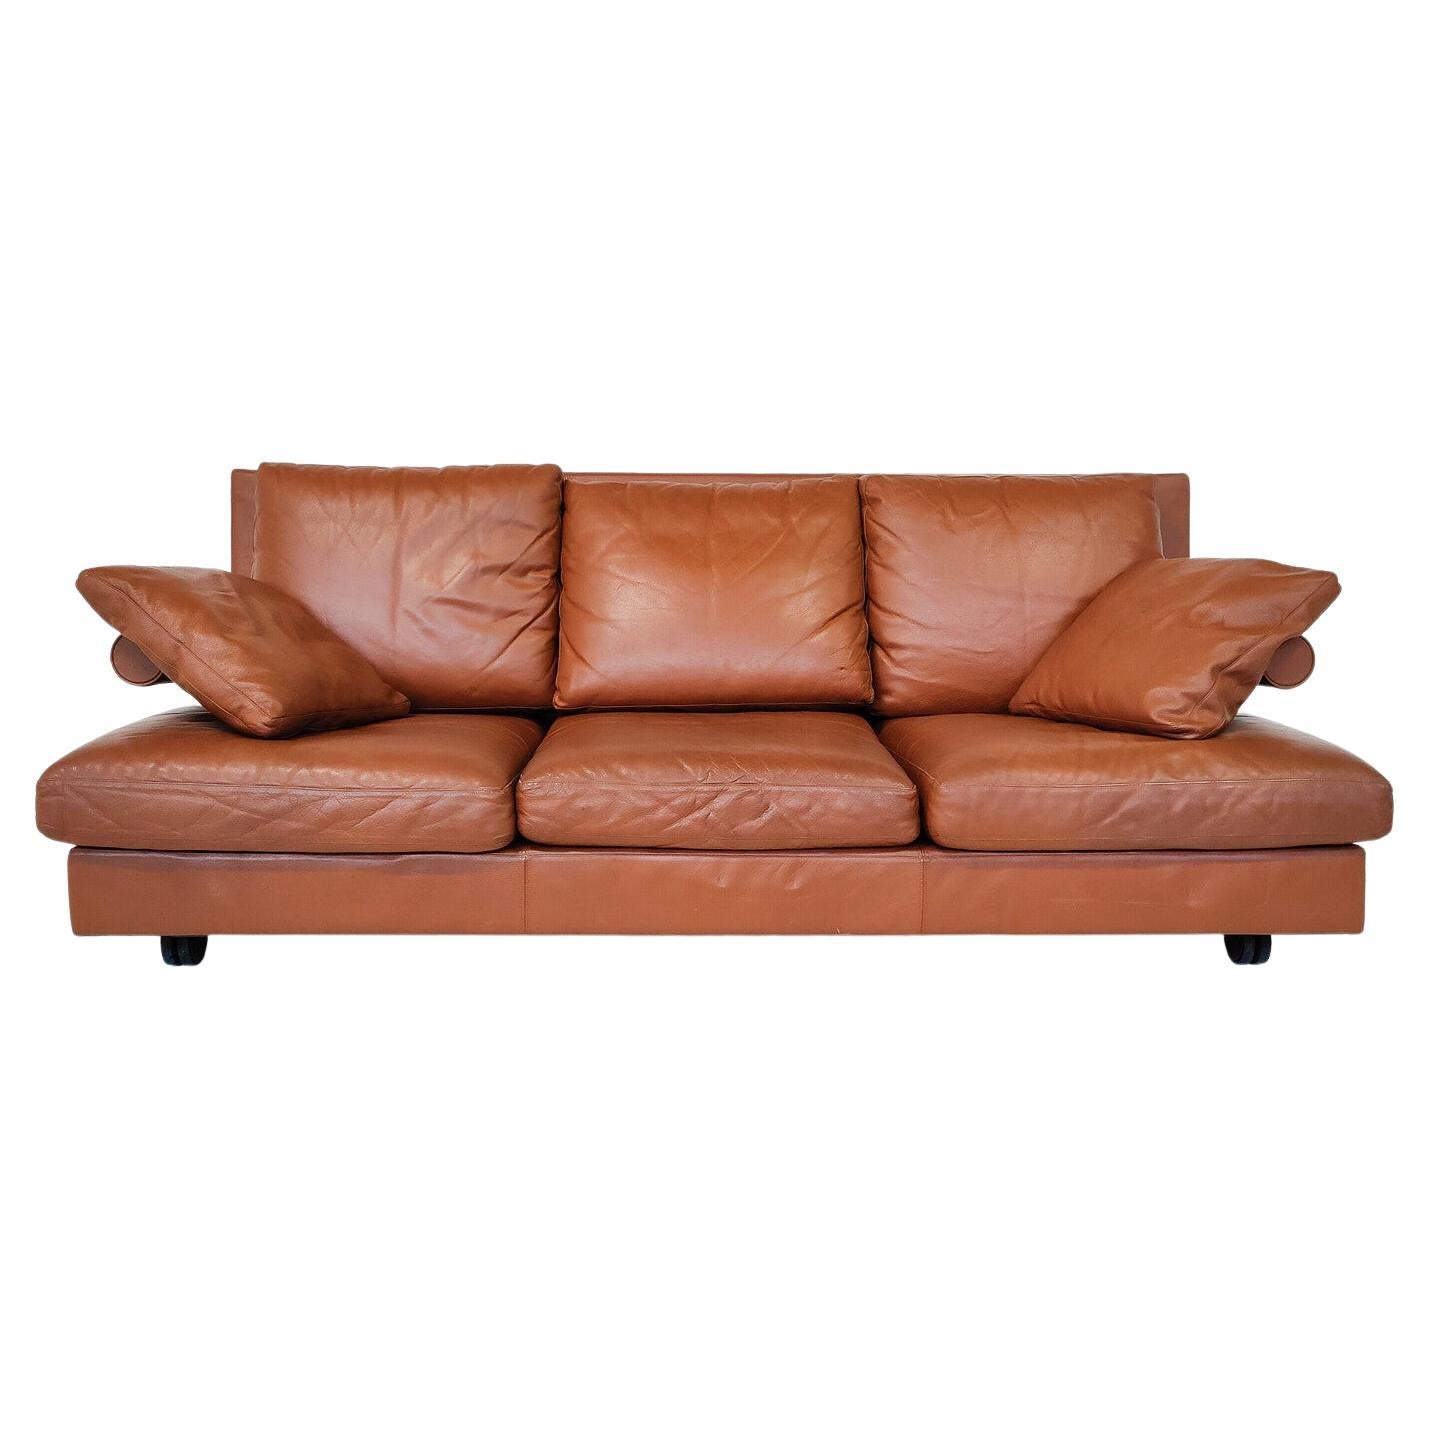 Mid-Century Modern Baisity Sofa by Antonio Citterio for B&B Italia, Cognac Leath